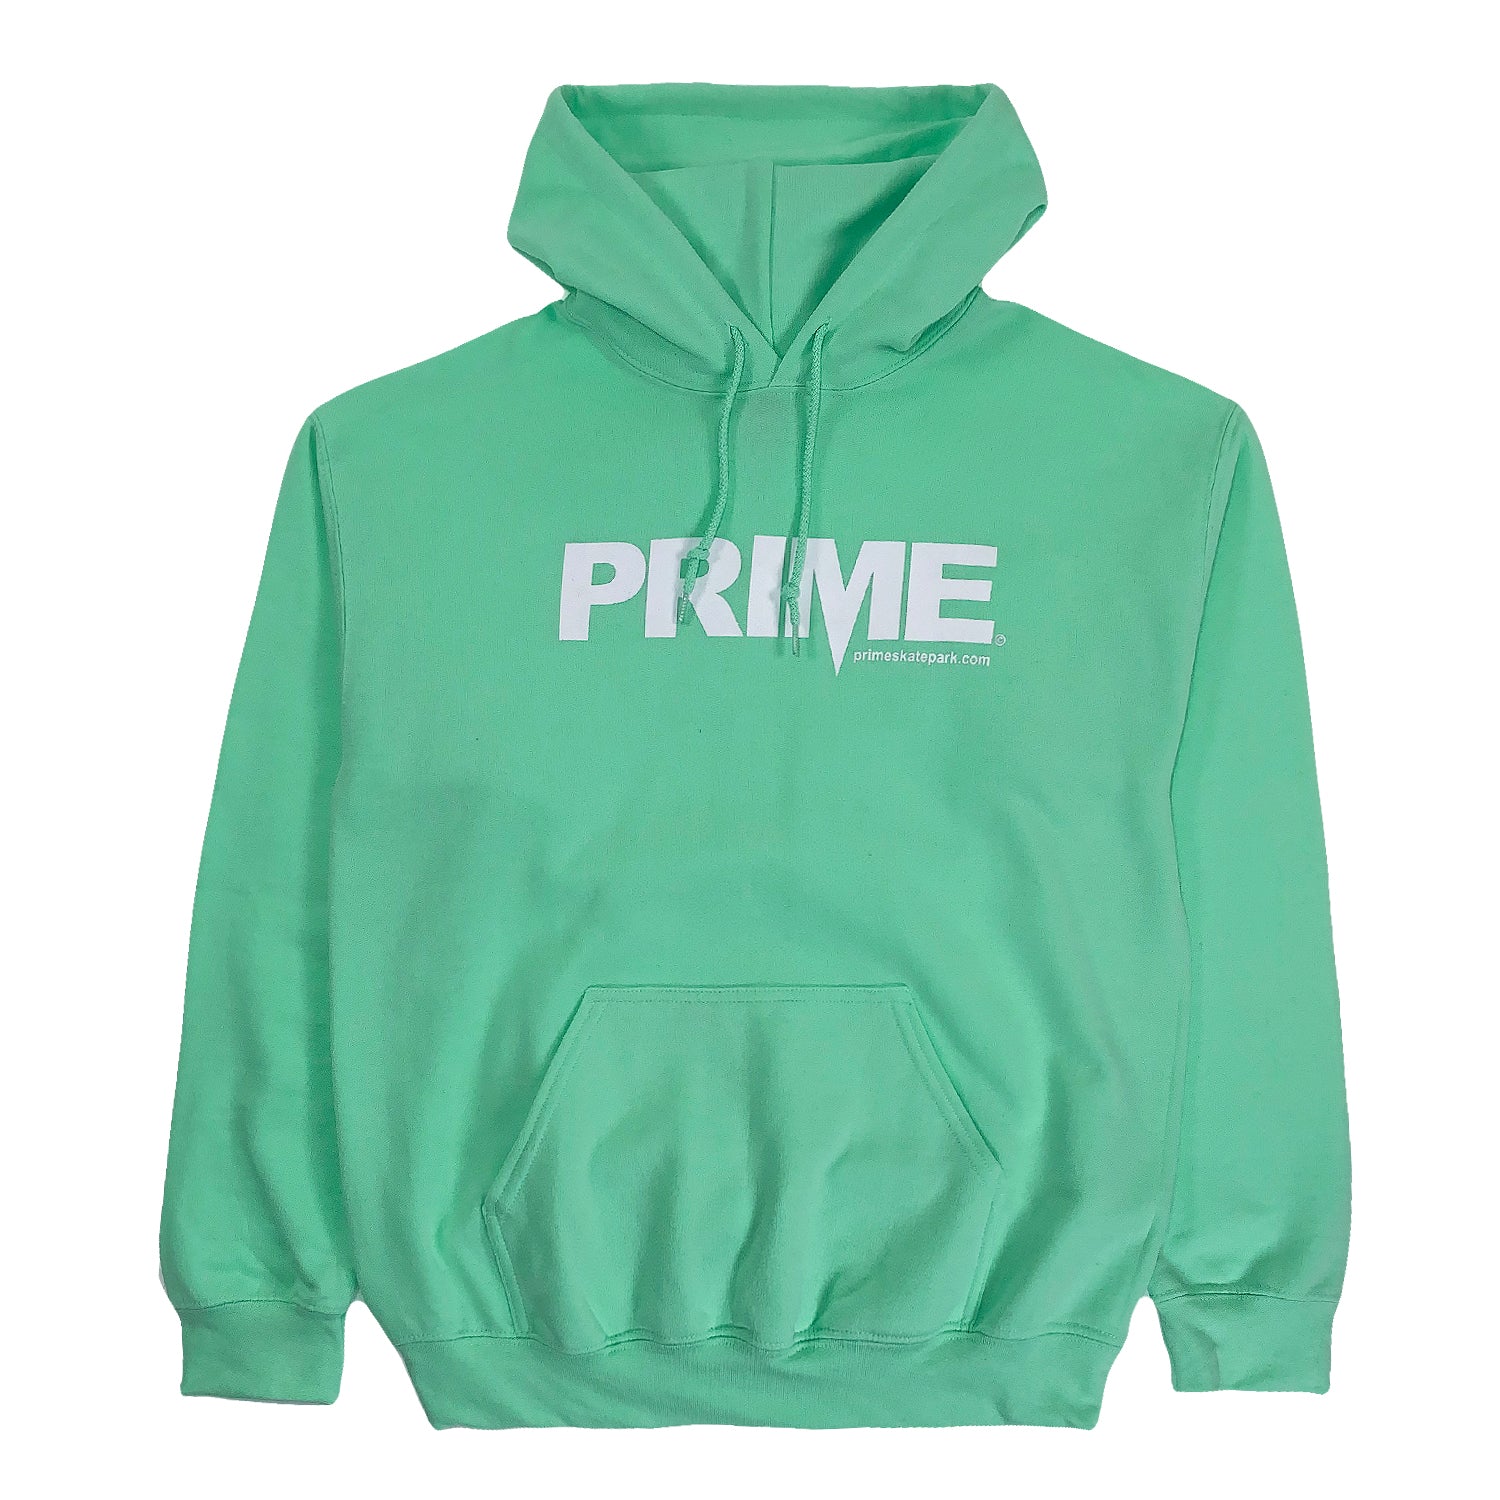 Prime Delux OG Logo Hooded Sweat - Mint / White - Prime Delux Store